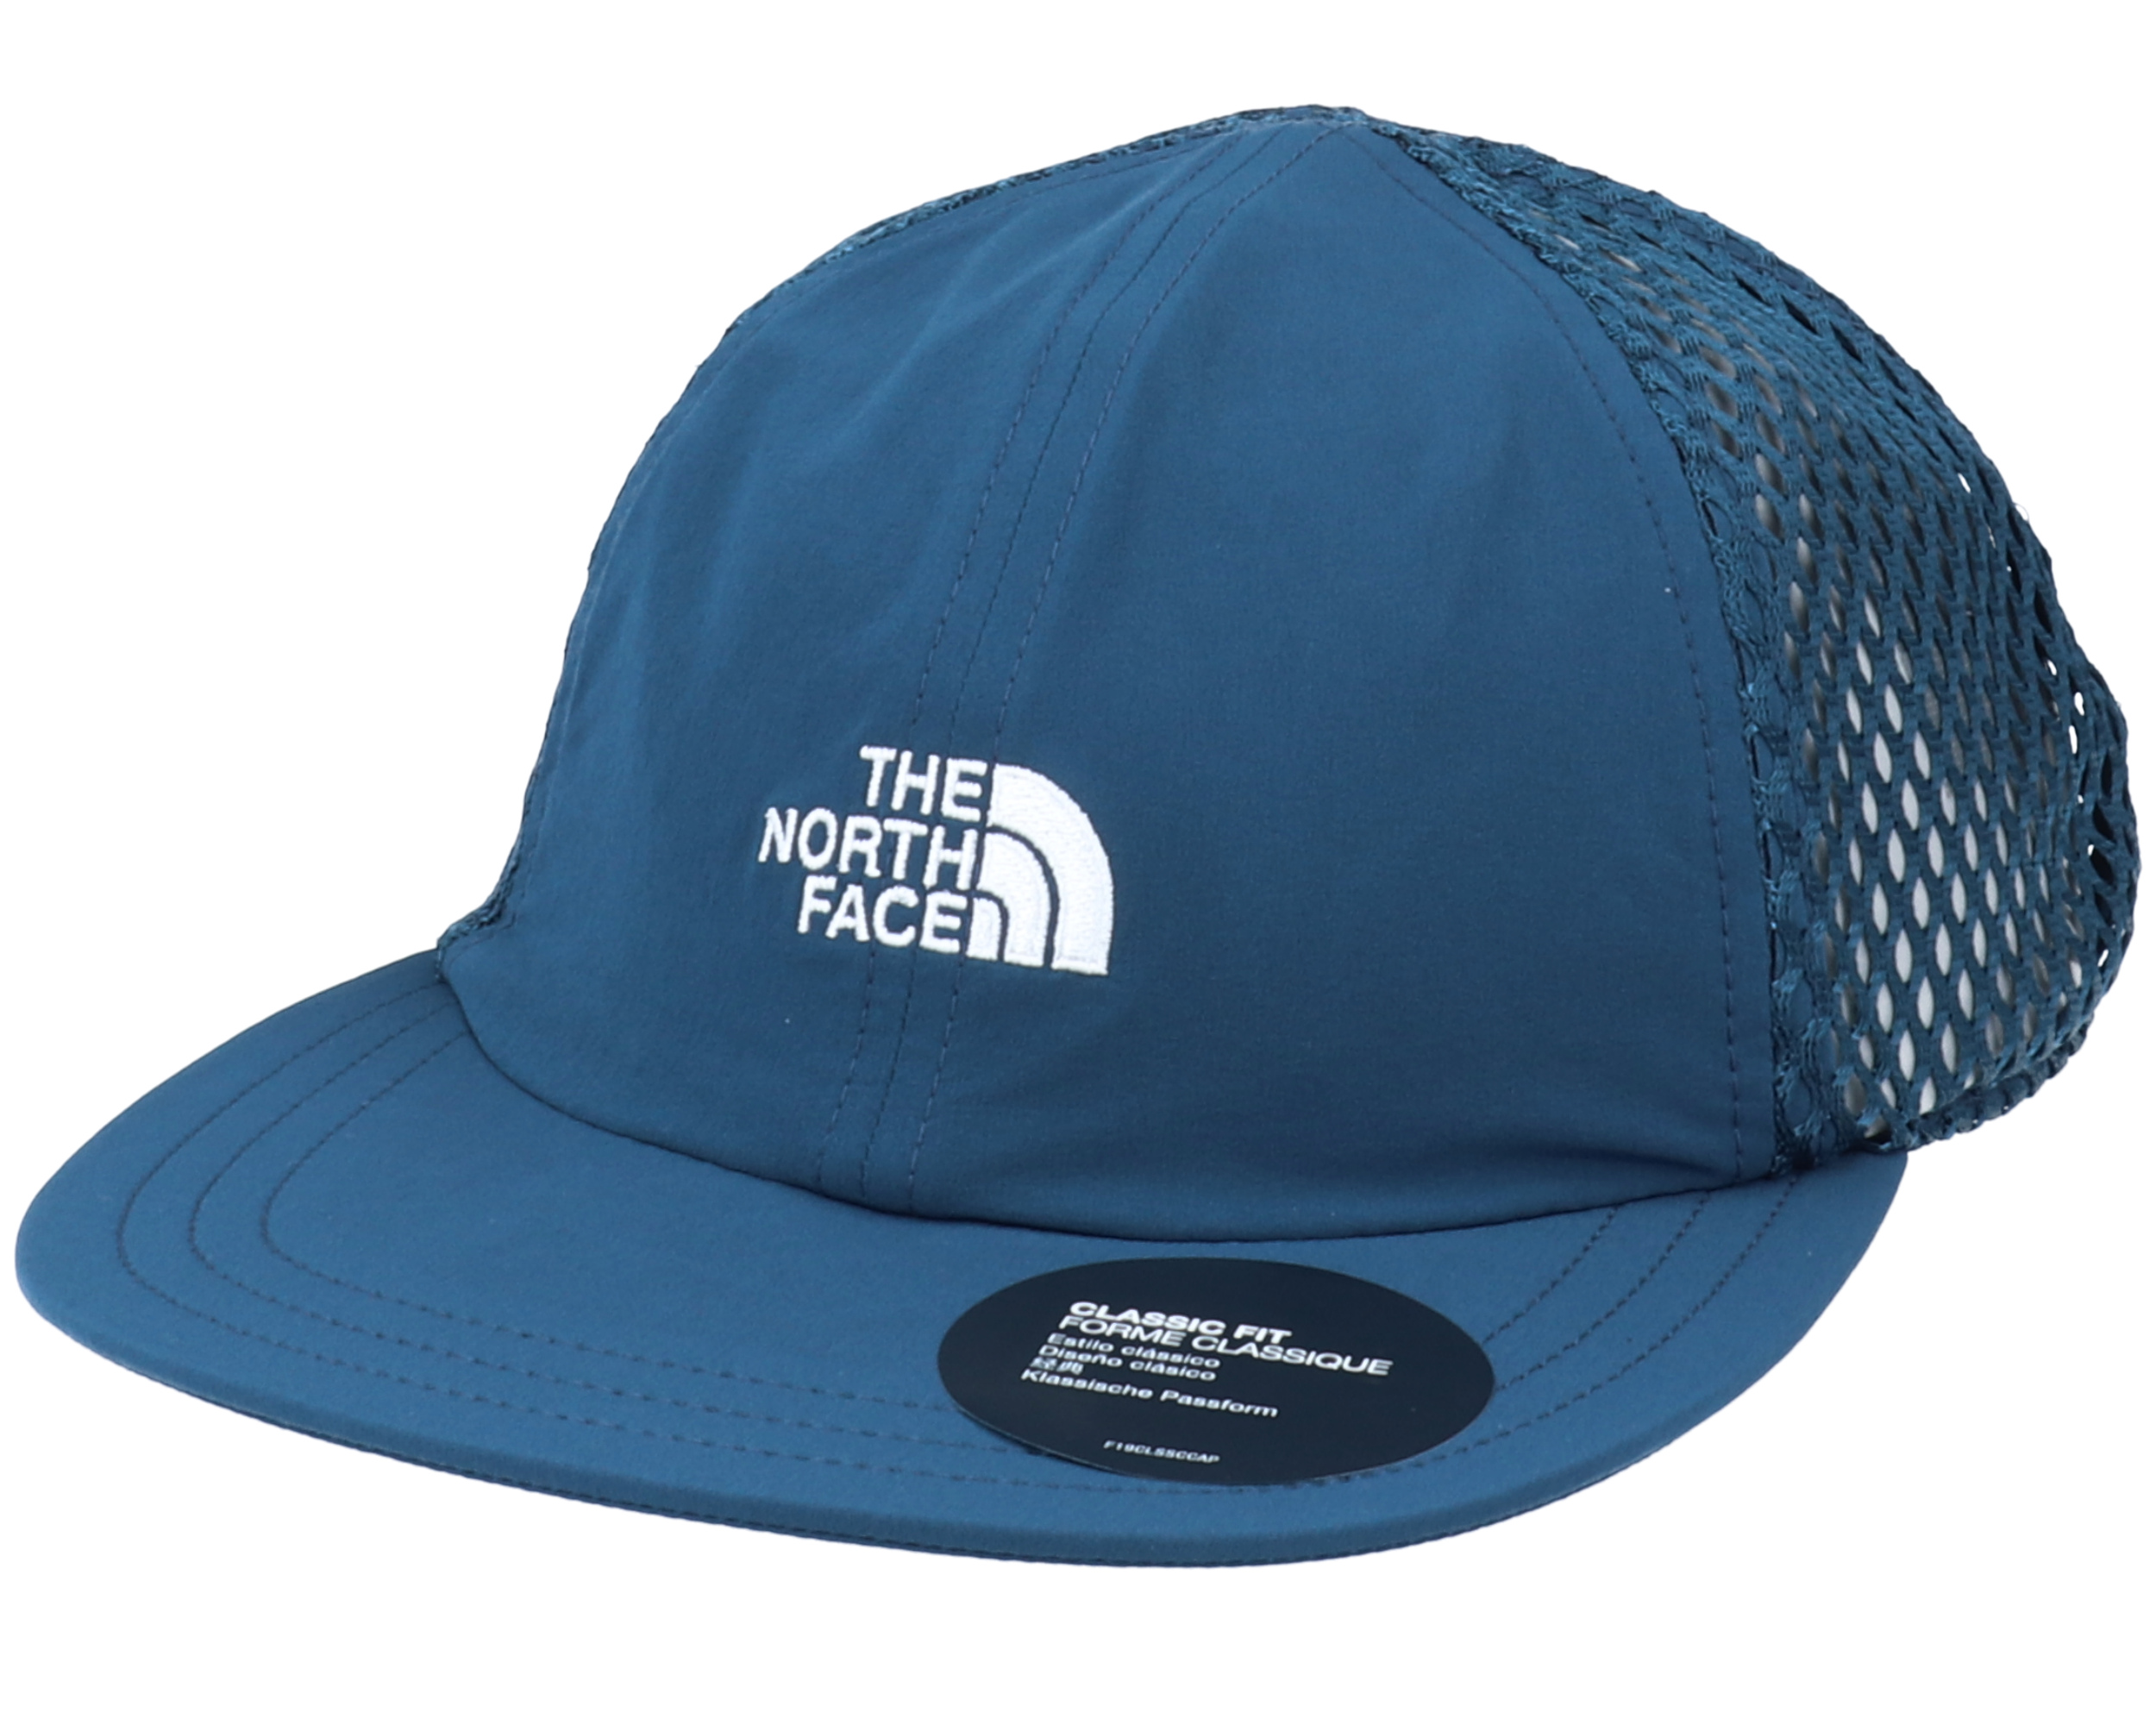 Runner Mesh Monterey Blue Strap Cap - The North Face caps | Hatstore.co.uk